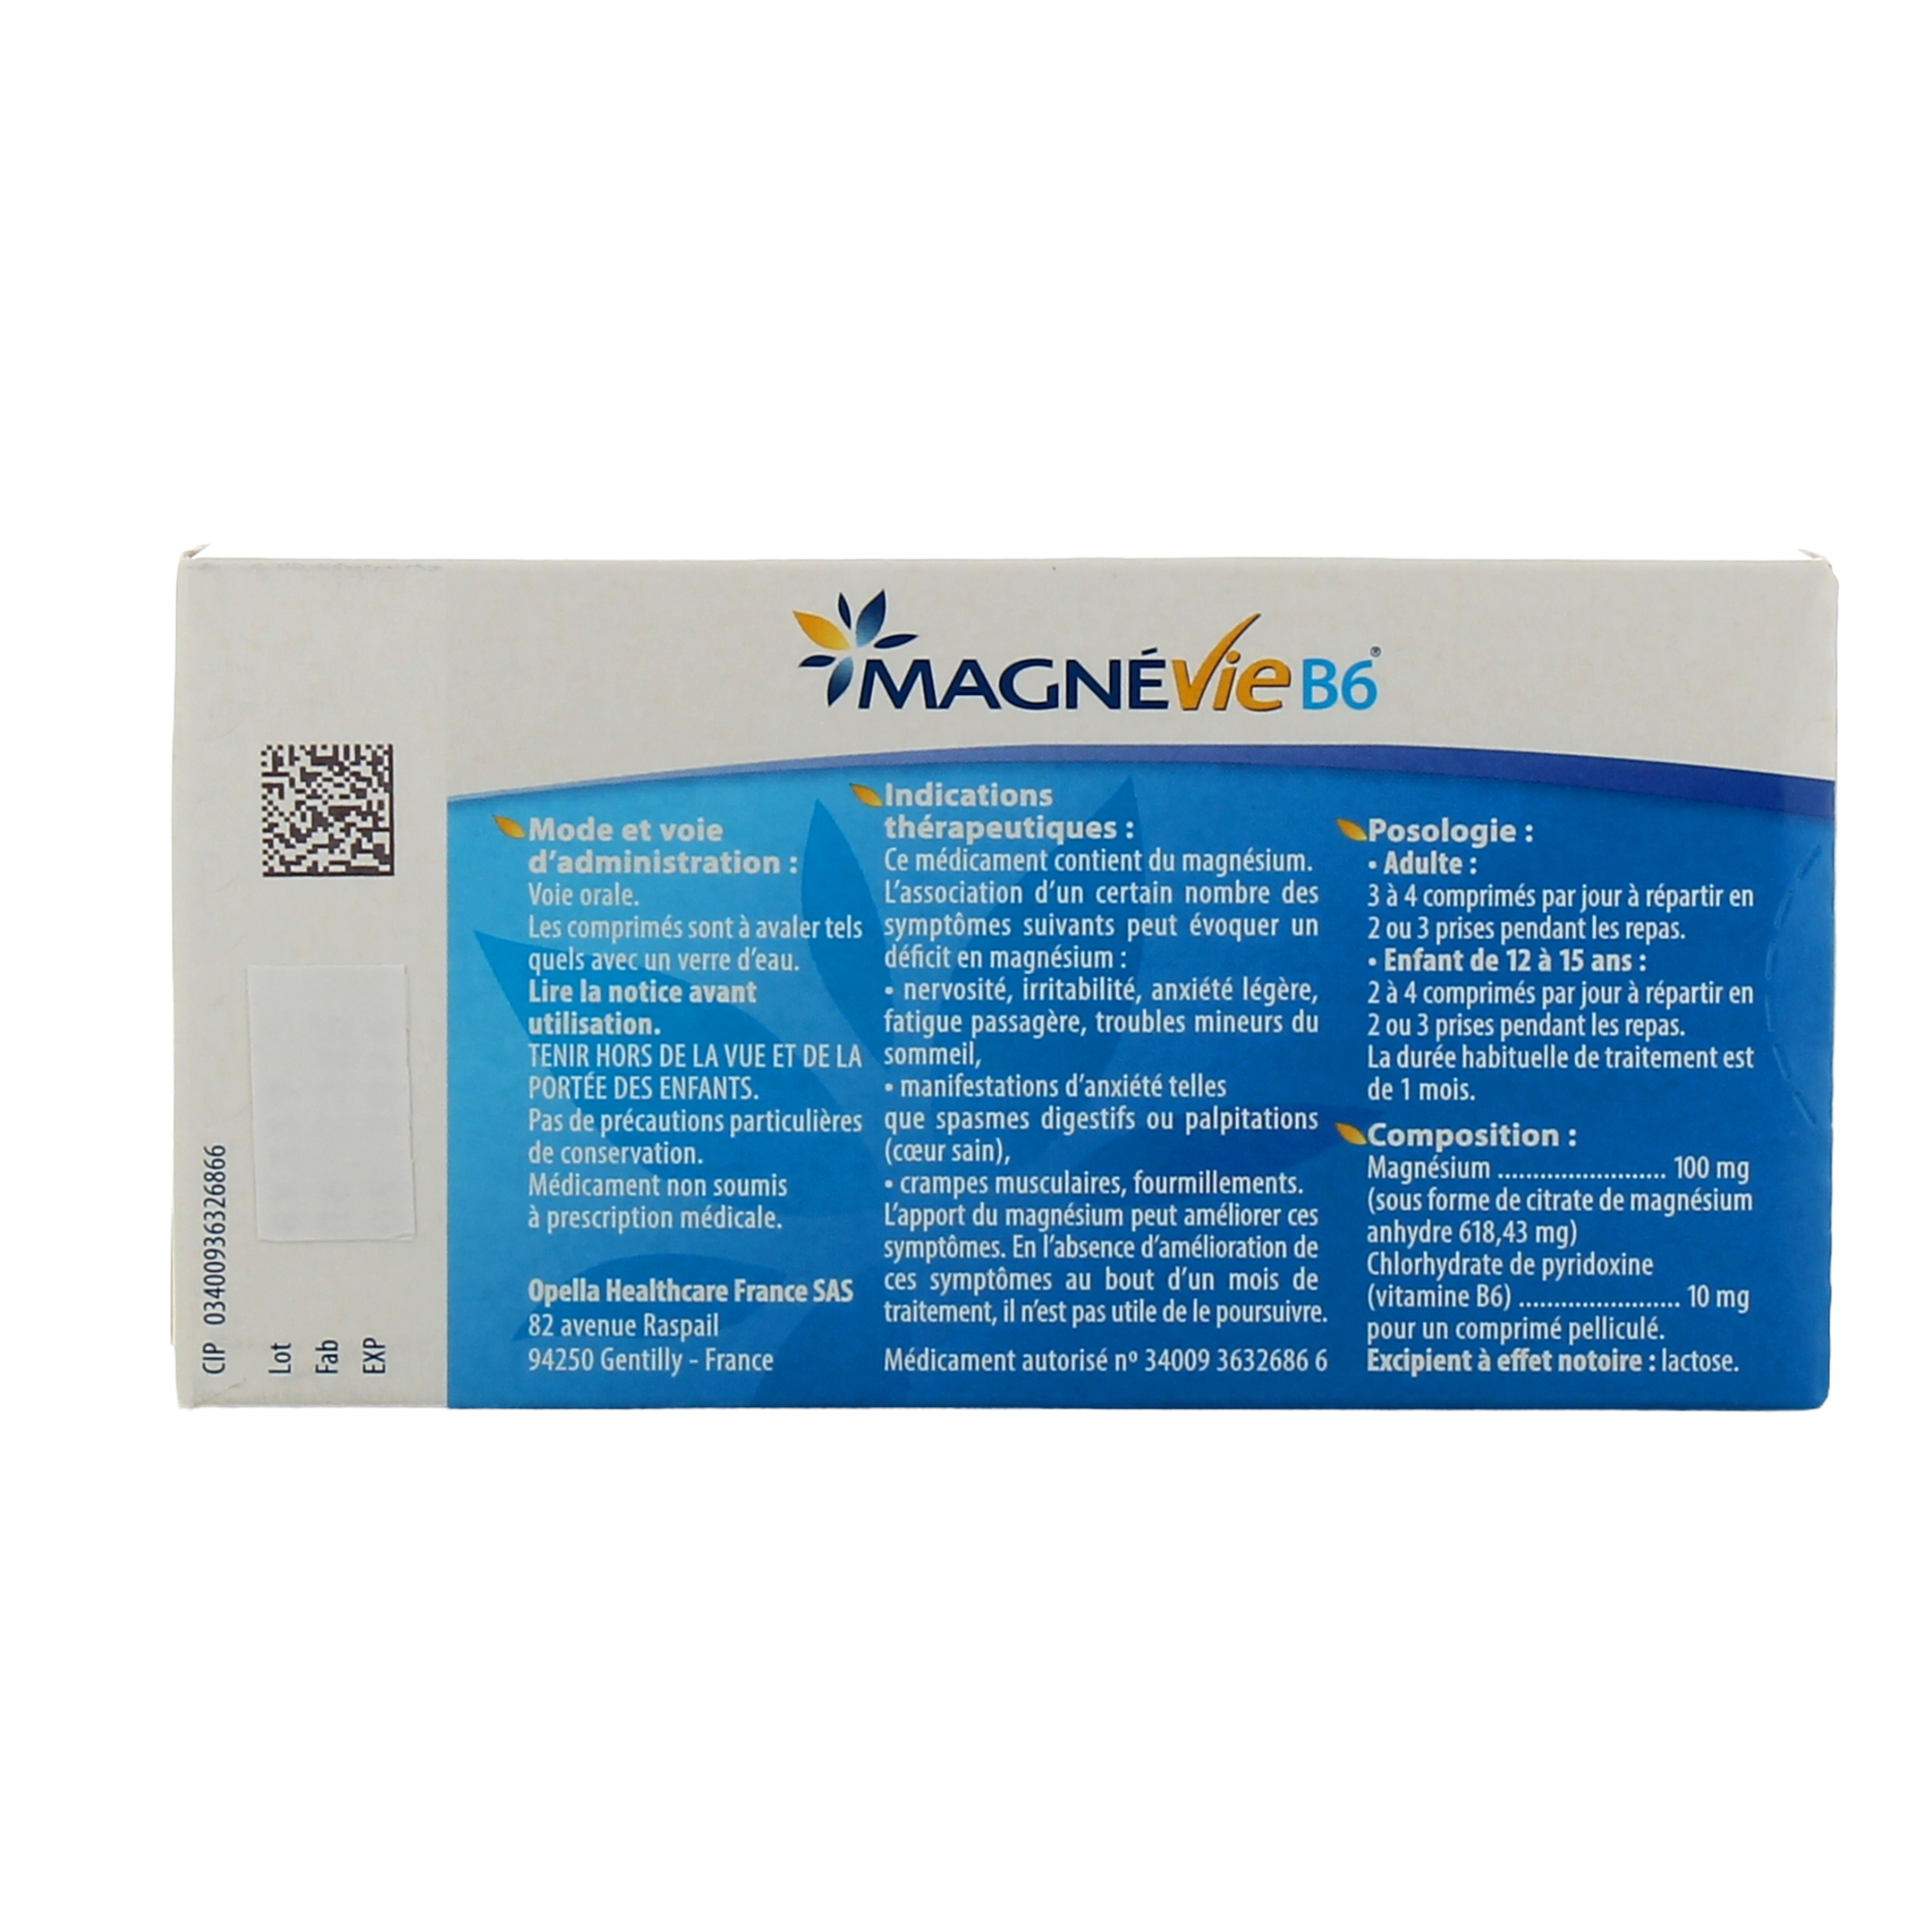 MagnéVie B6 - Cure de magnésium